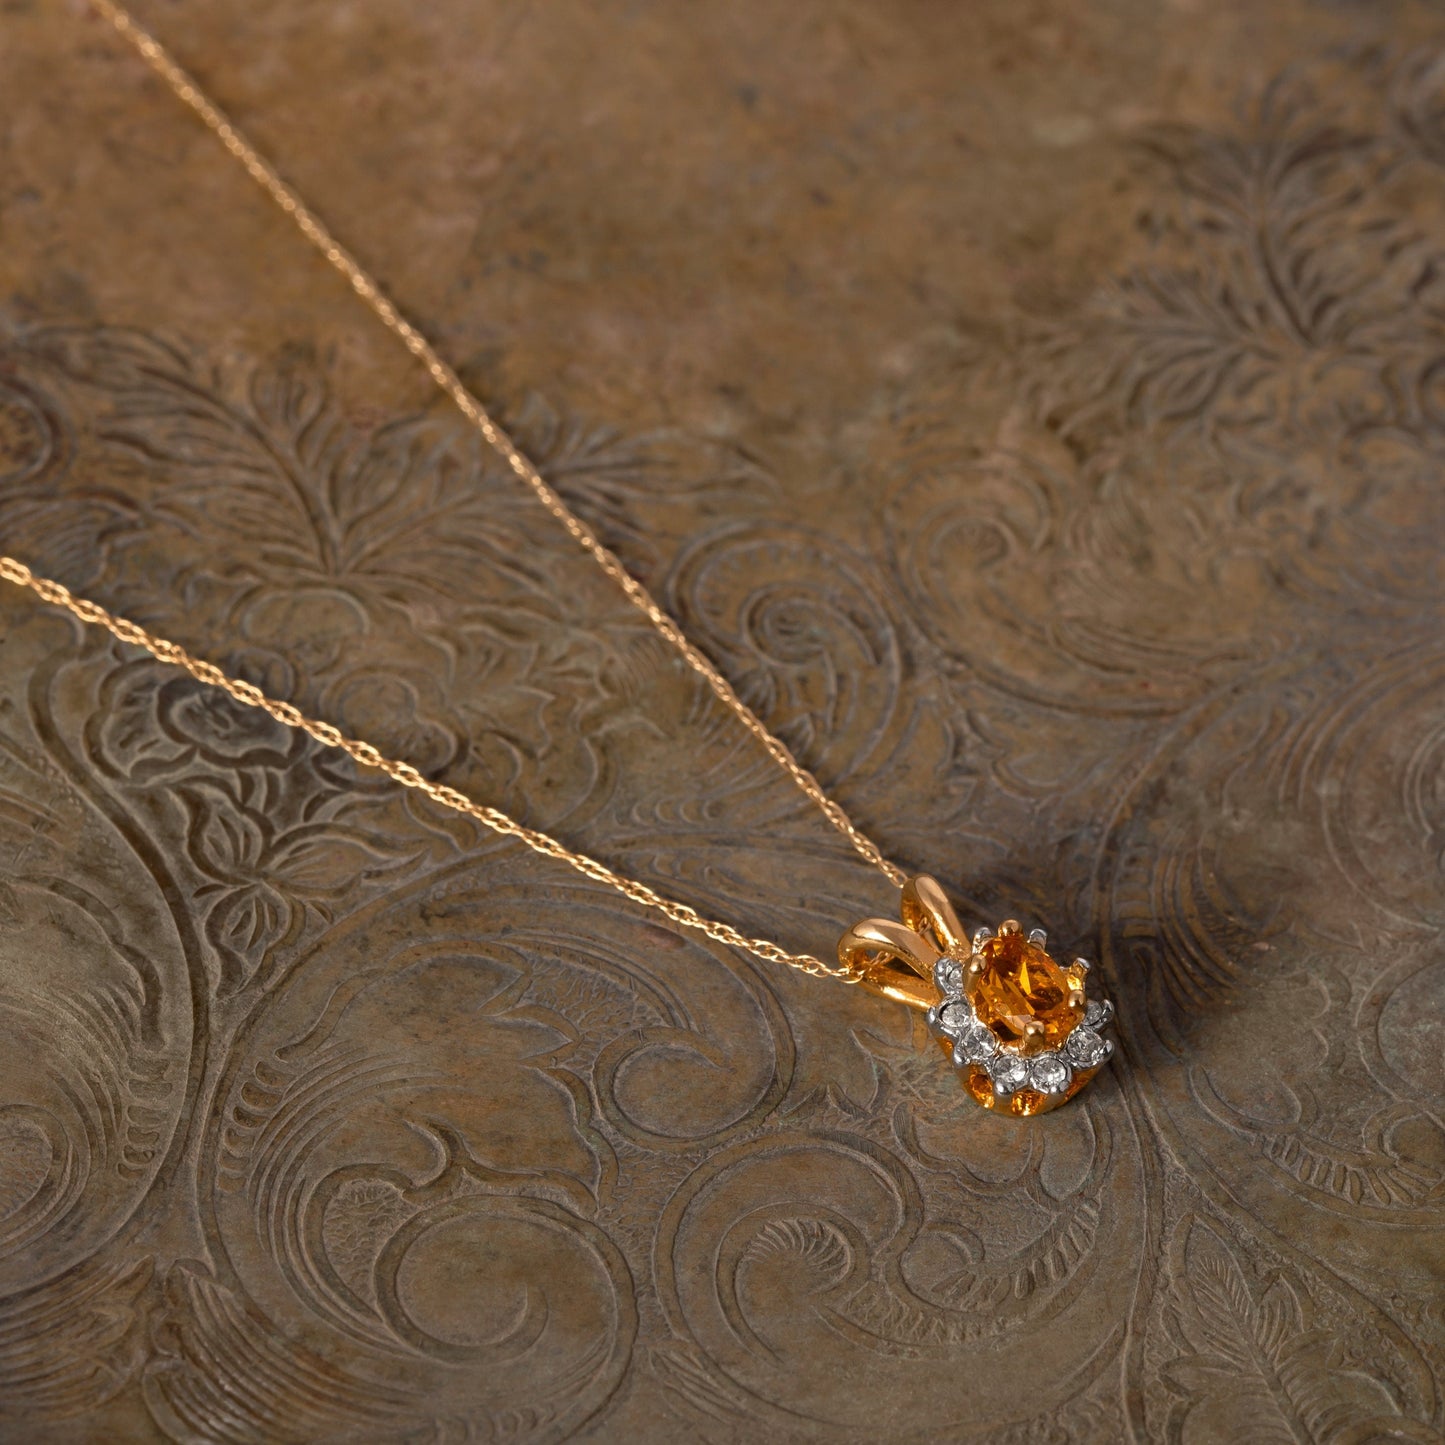 Vintage Clear Swarovski Crystal Necklace Antique Diamond-like necklace #N1291 by PVD Vintage Jewelry